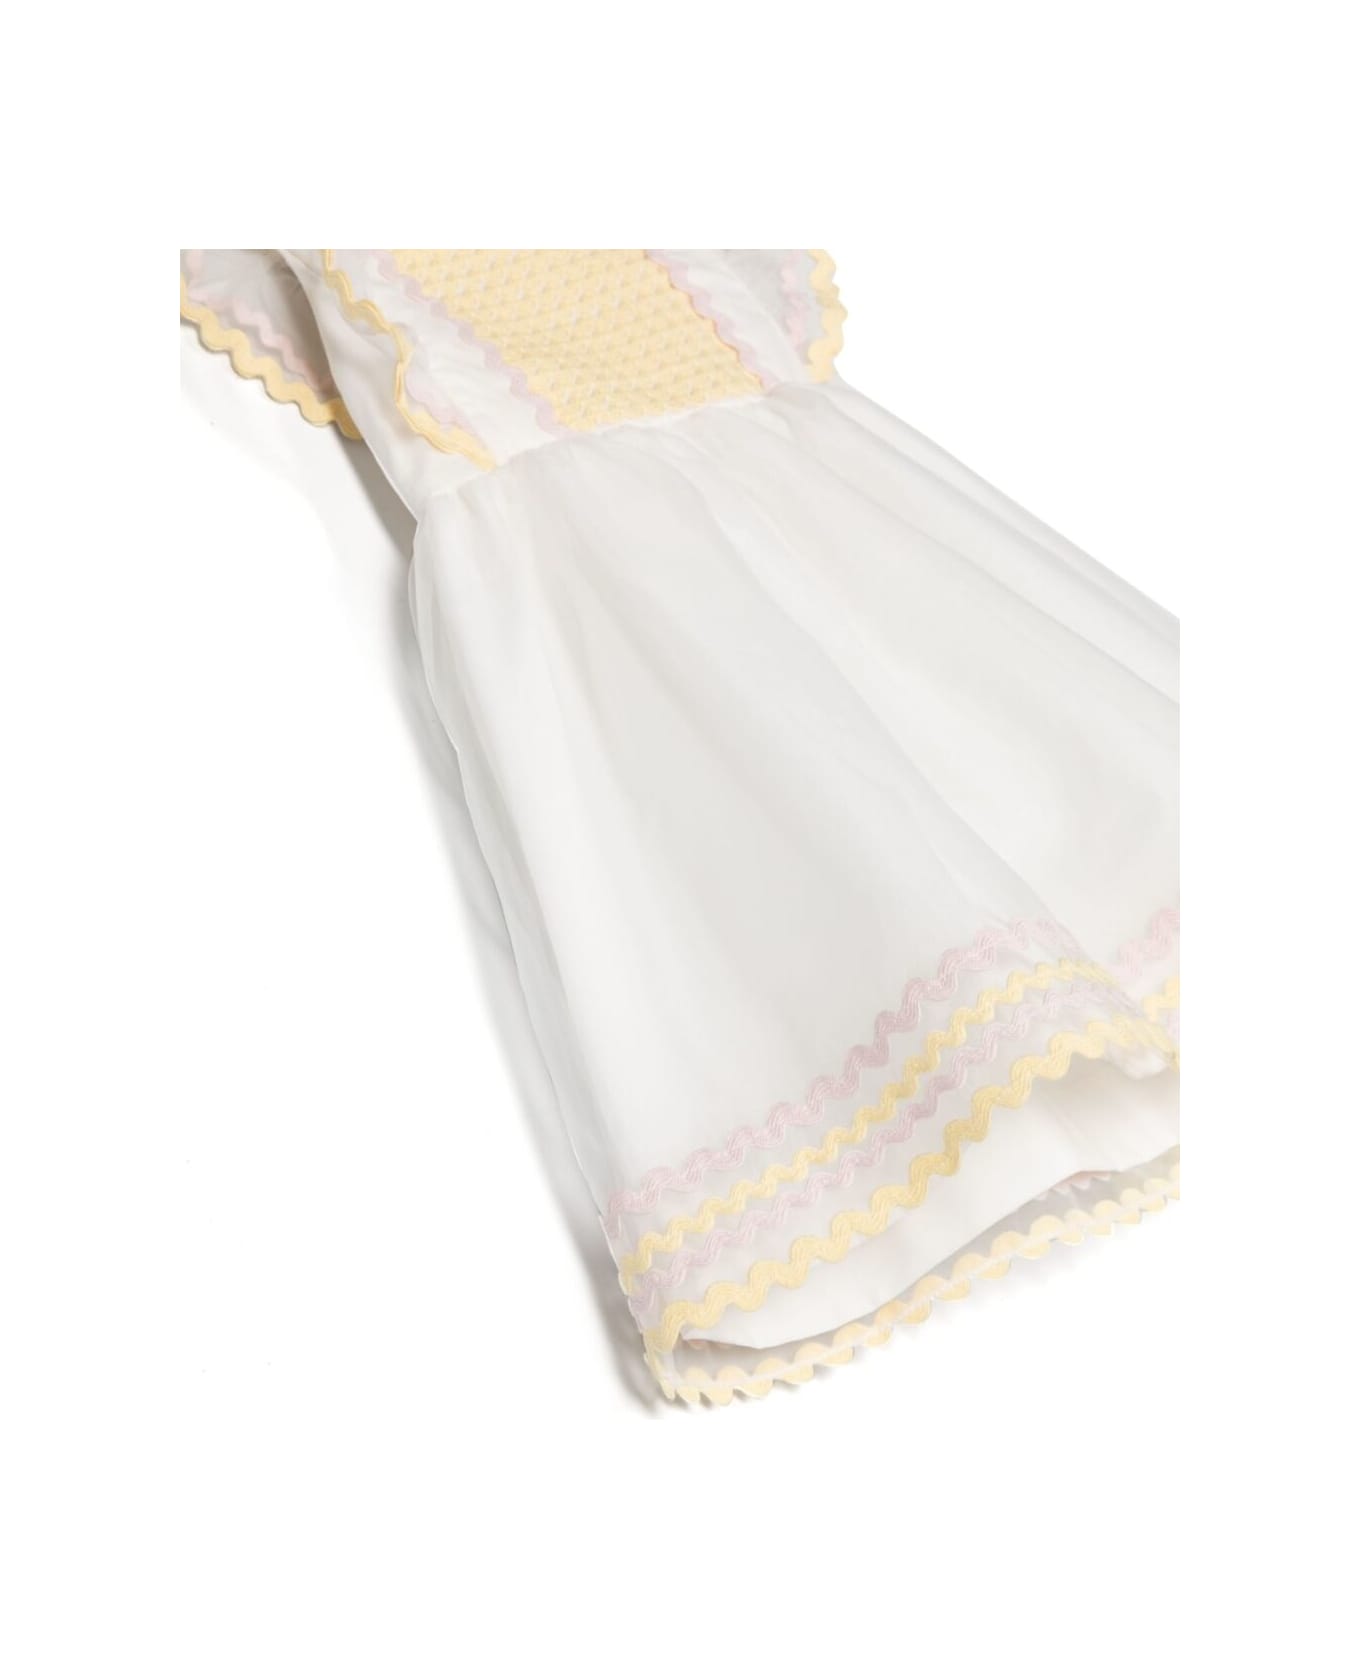 Stella McCartney Kids Ruffled Dress With Zig-zag Detail In White And Yellow Cotton Baby - White ボディスーツ＆セットアップ